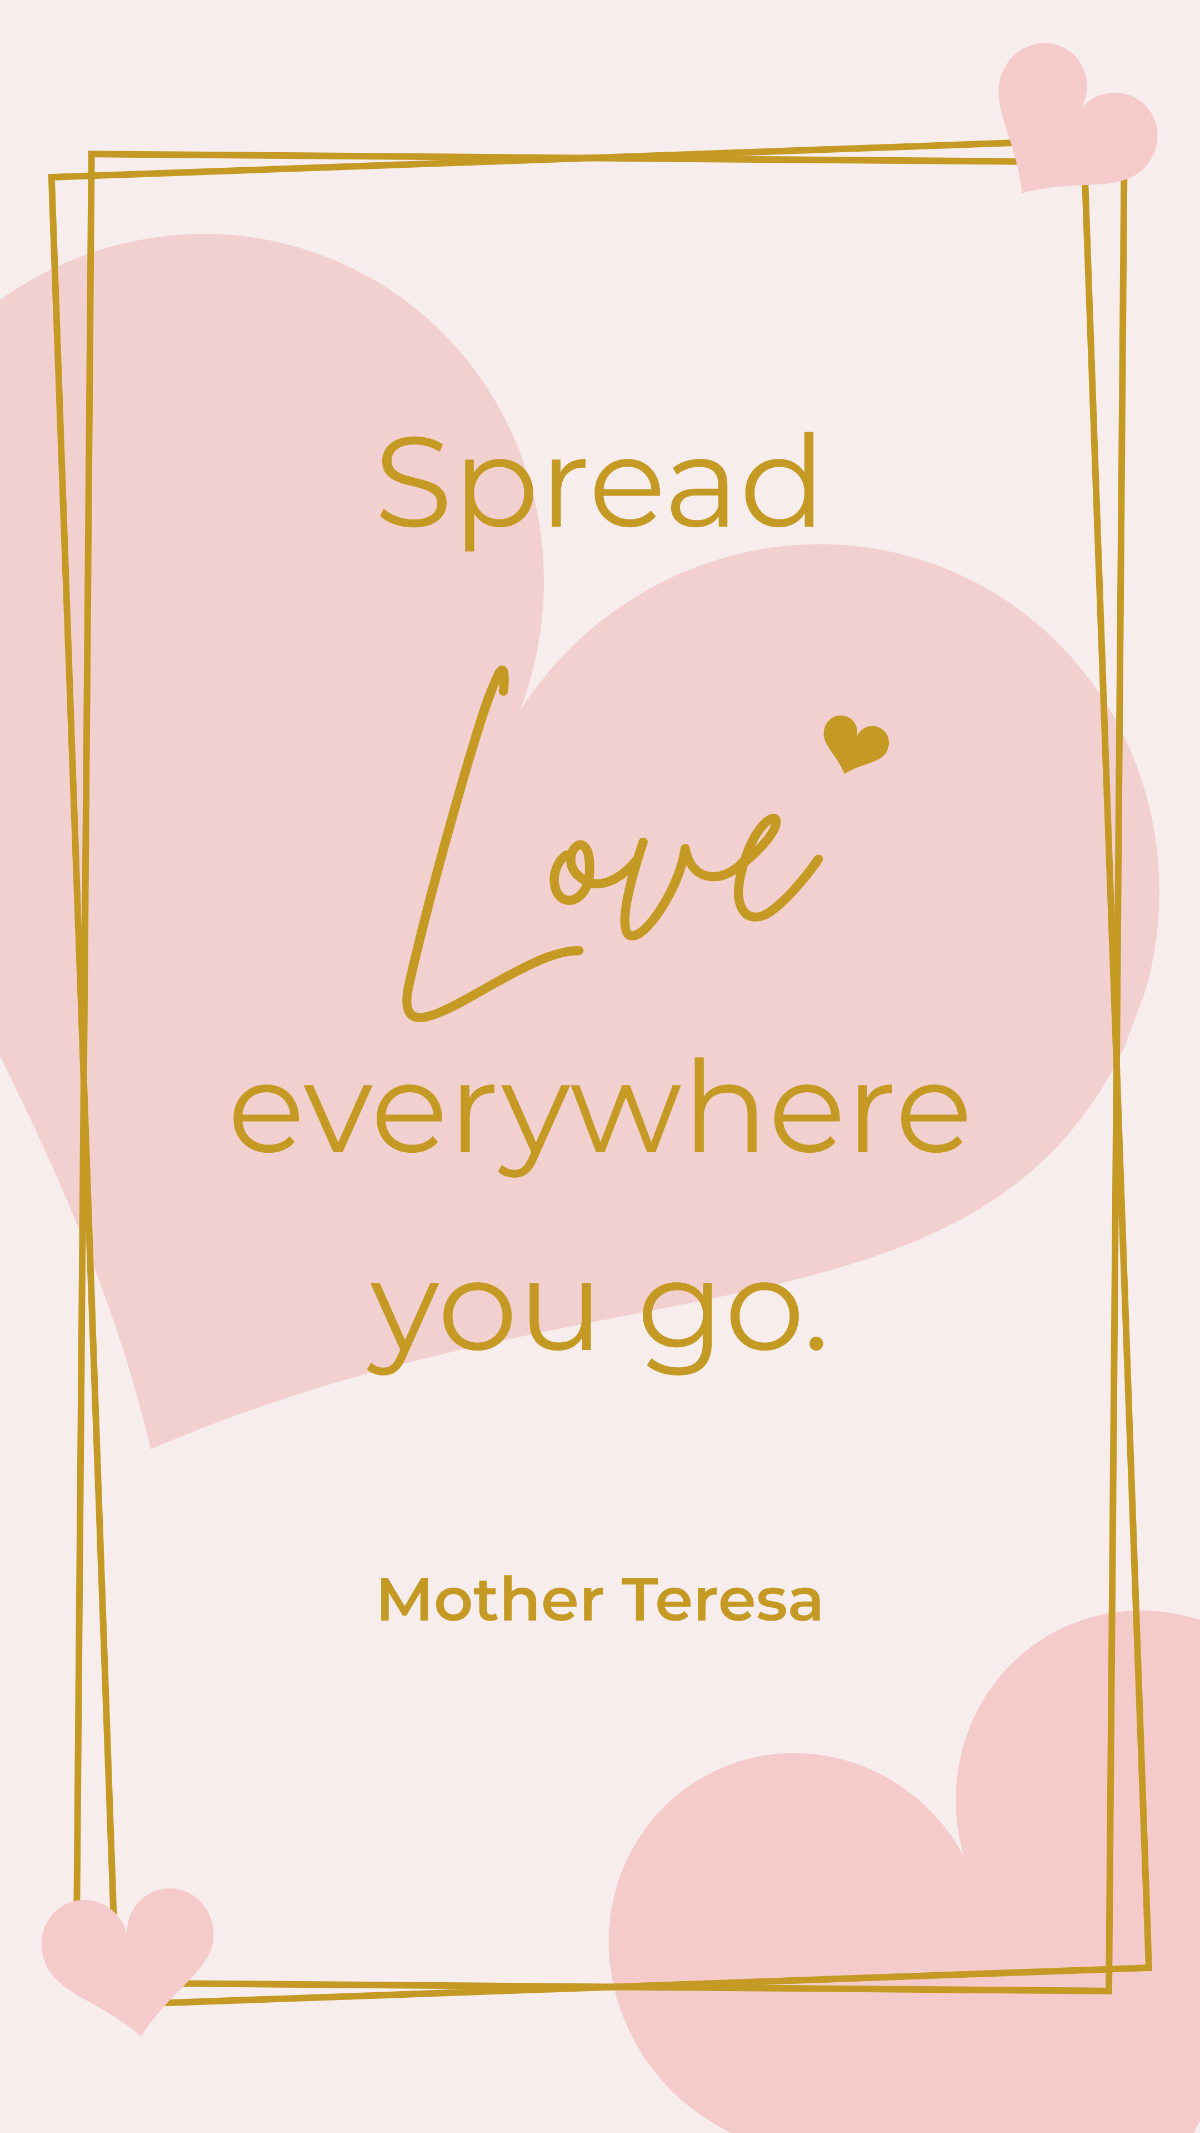 Mother Teresa - Spread love everywhere you go.